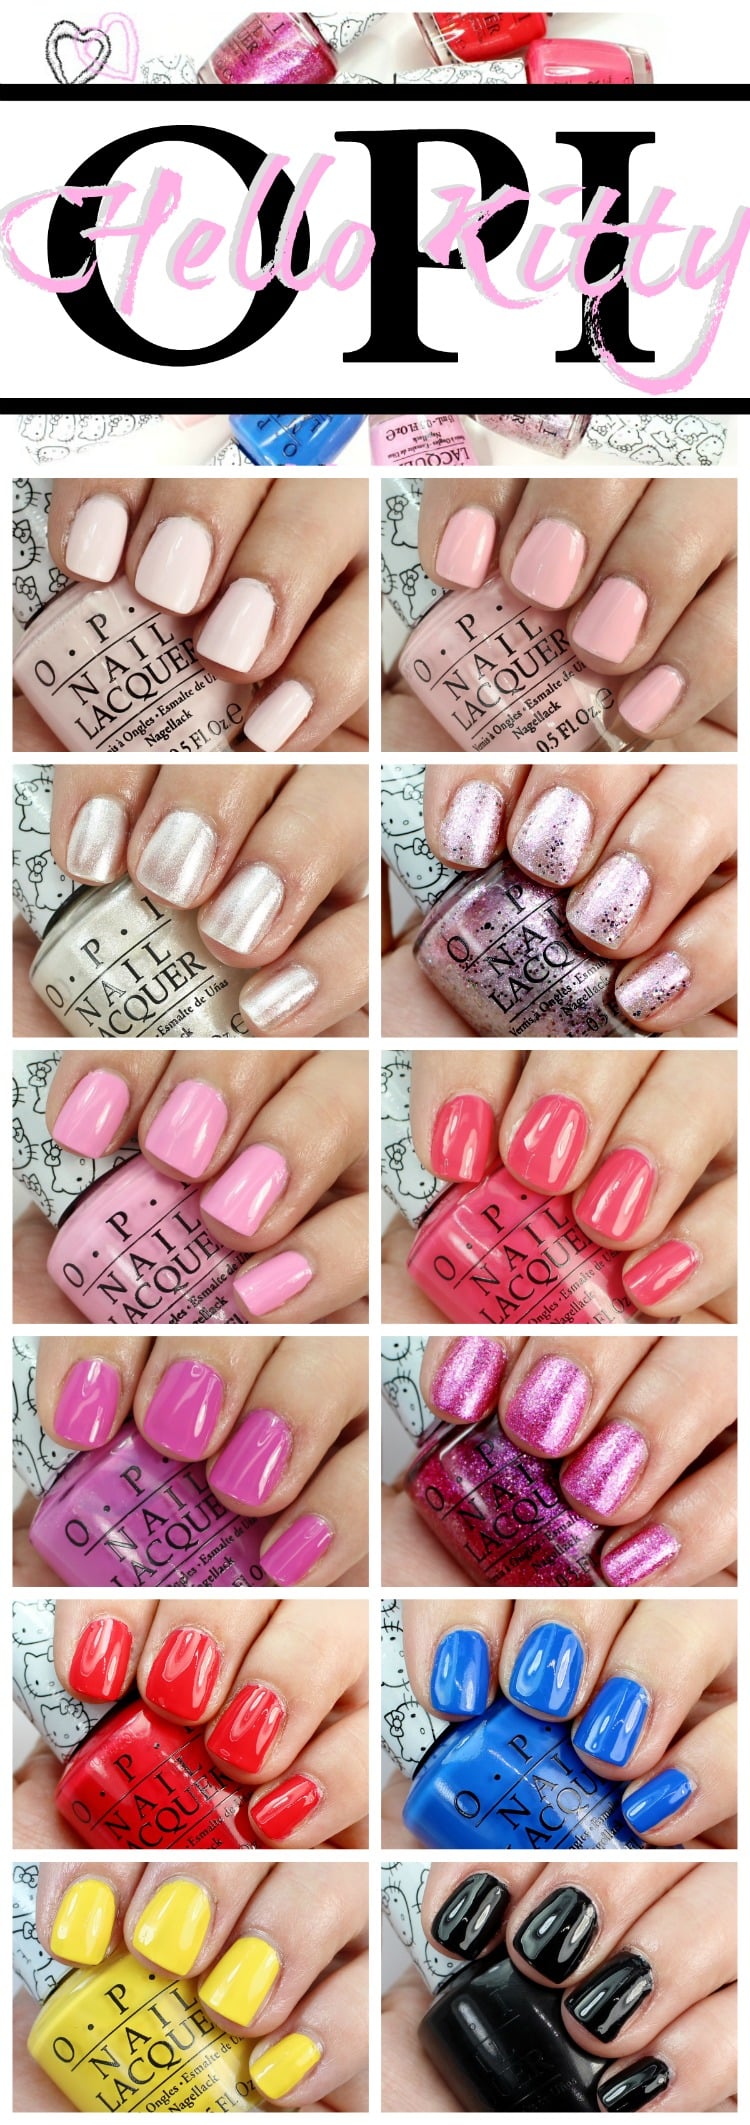 OPI Hello Kitty Swatches Nail polish lacquer